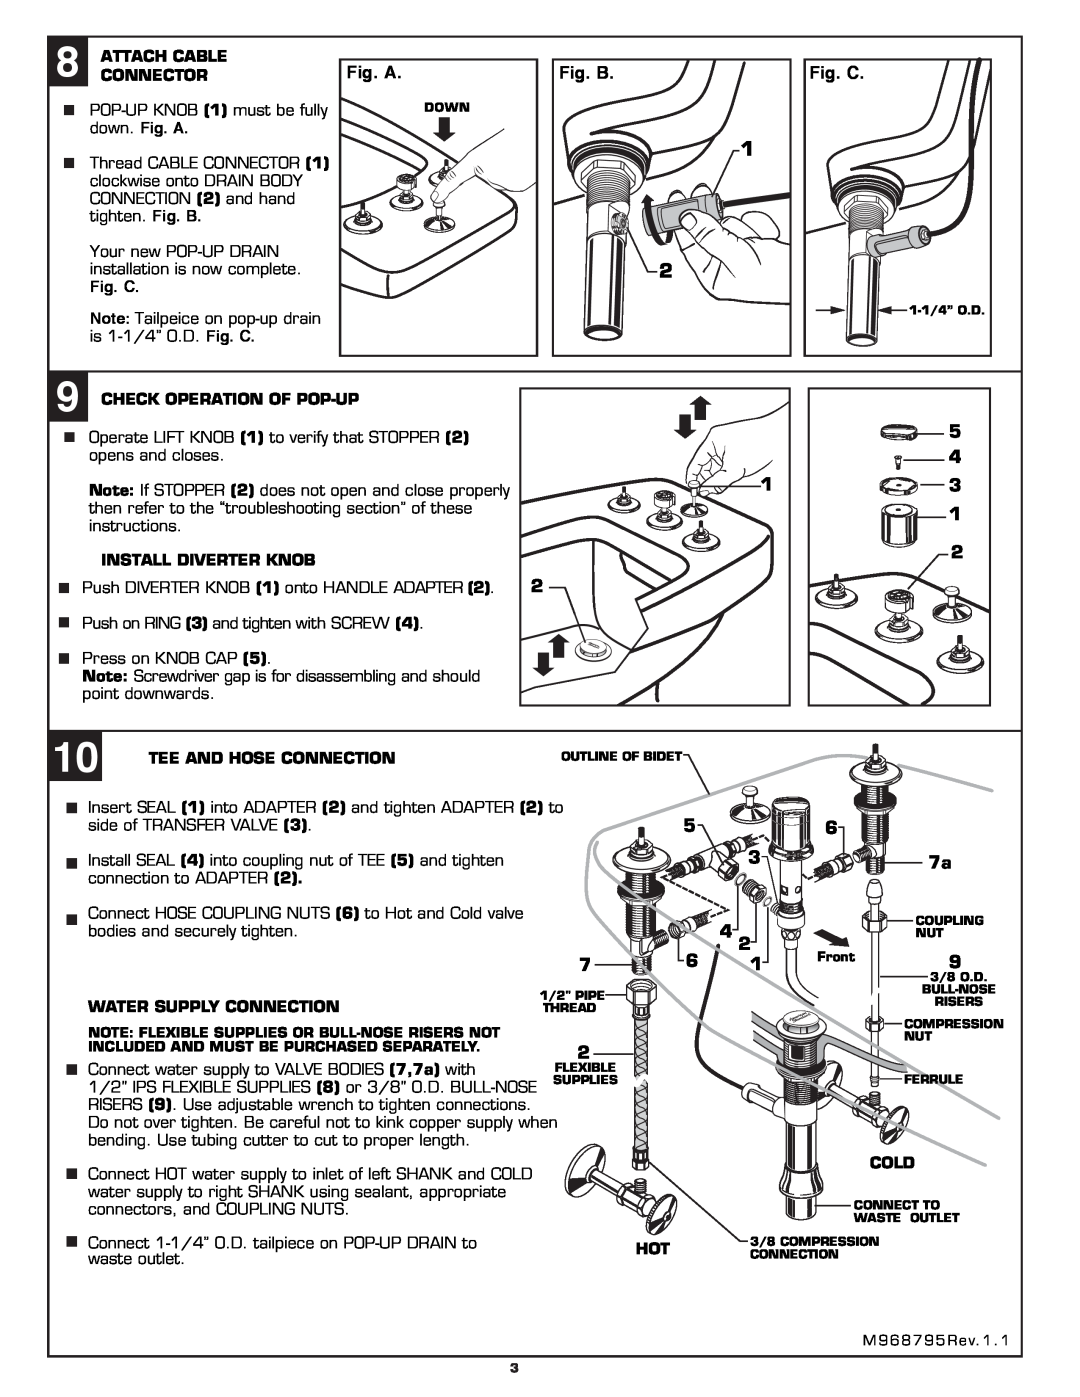 American Standard 3475.500, 3475.300 installation instructions Fig. A, Fig. B, Fig. C, 5 4 